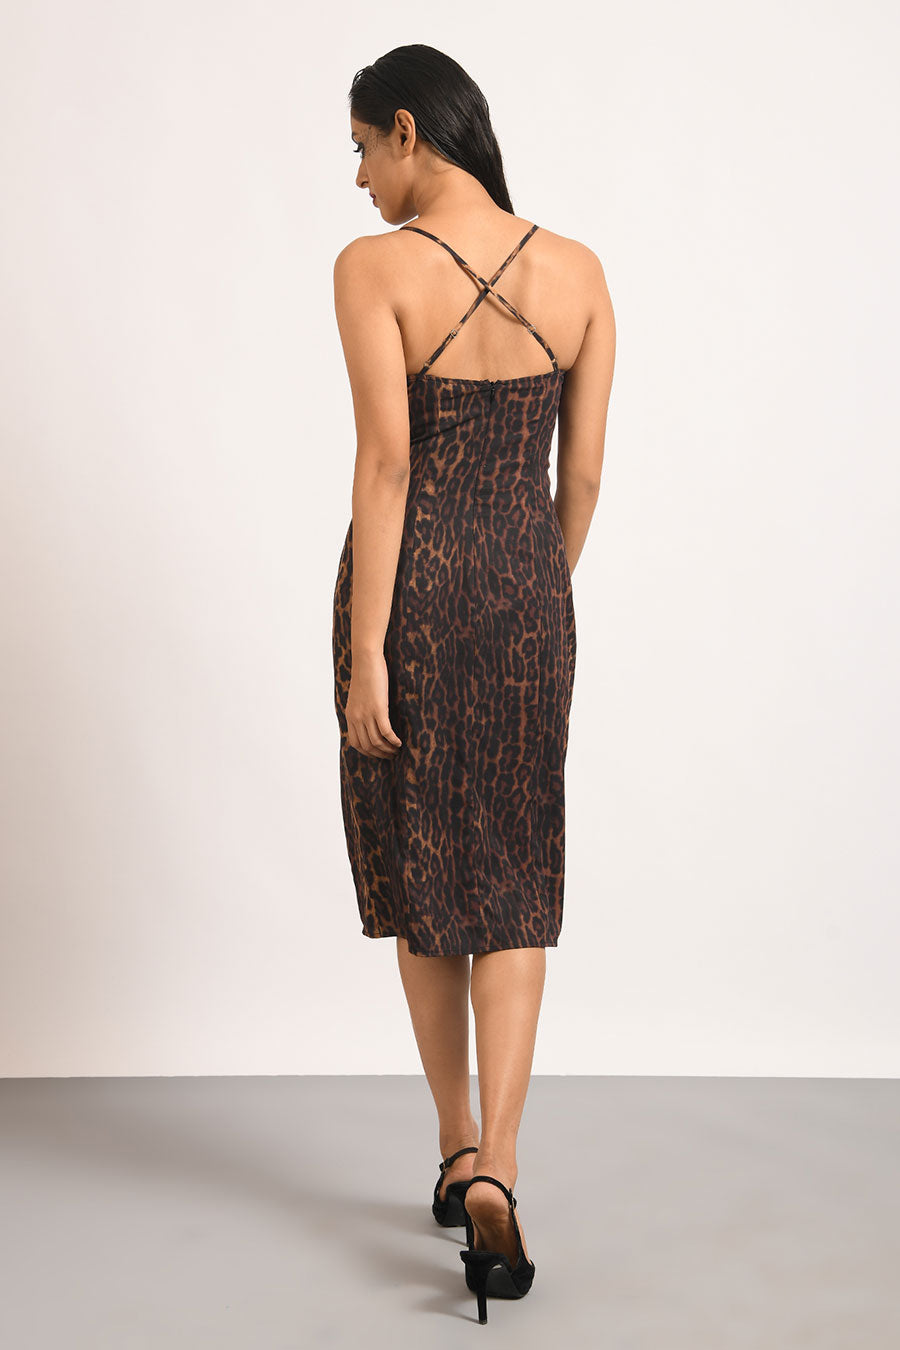 Leopard Print Strappy Dress